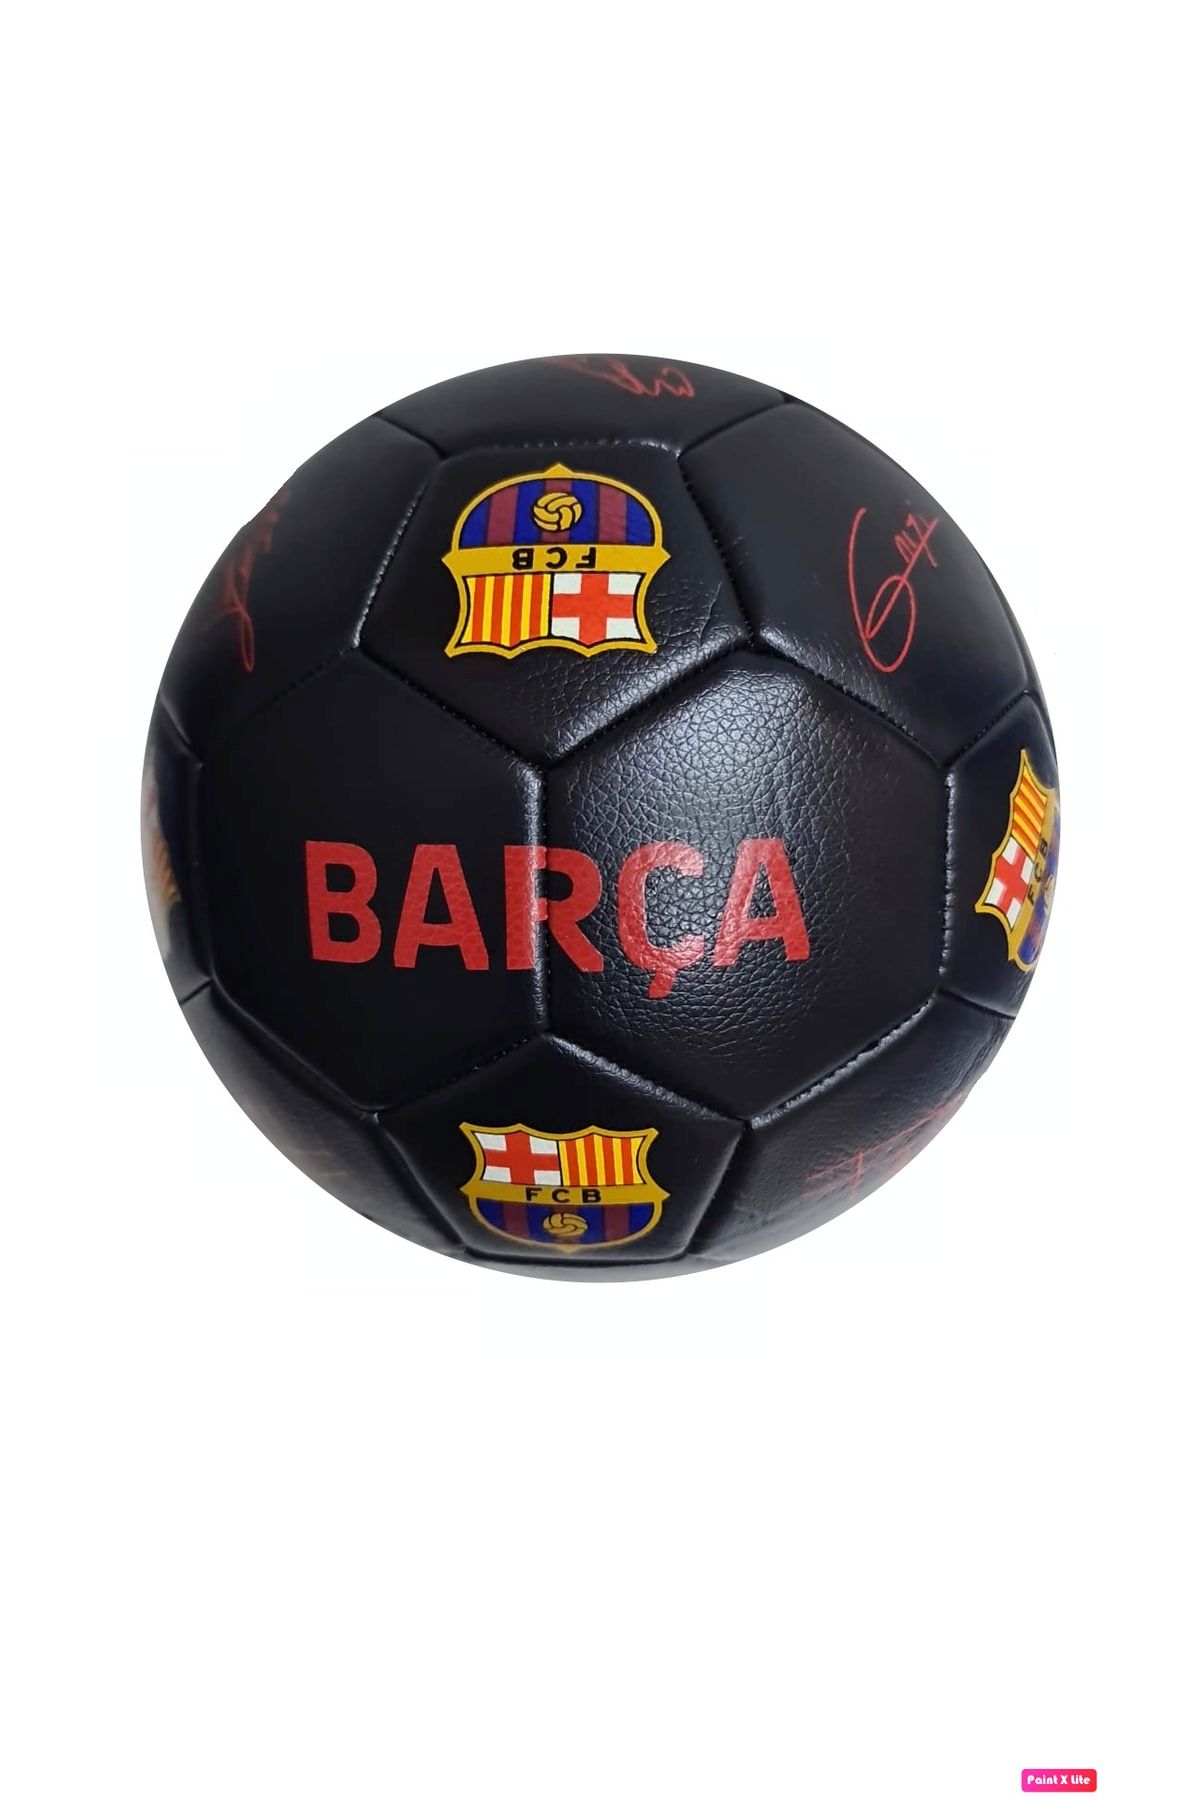 keufman Lisanslı Tam Kadro Imzalı Barça Fc Barcelona 4 Astarlı El Dikişli 400 Gr Futbol Topu No:5 Tüm Zemin